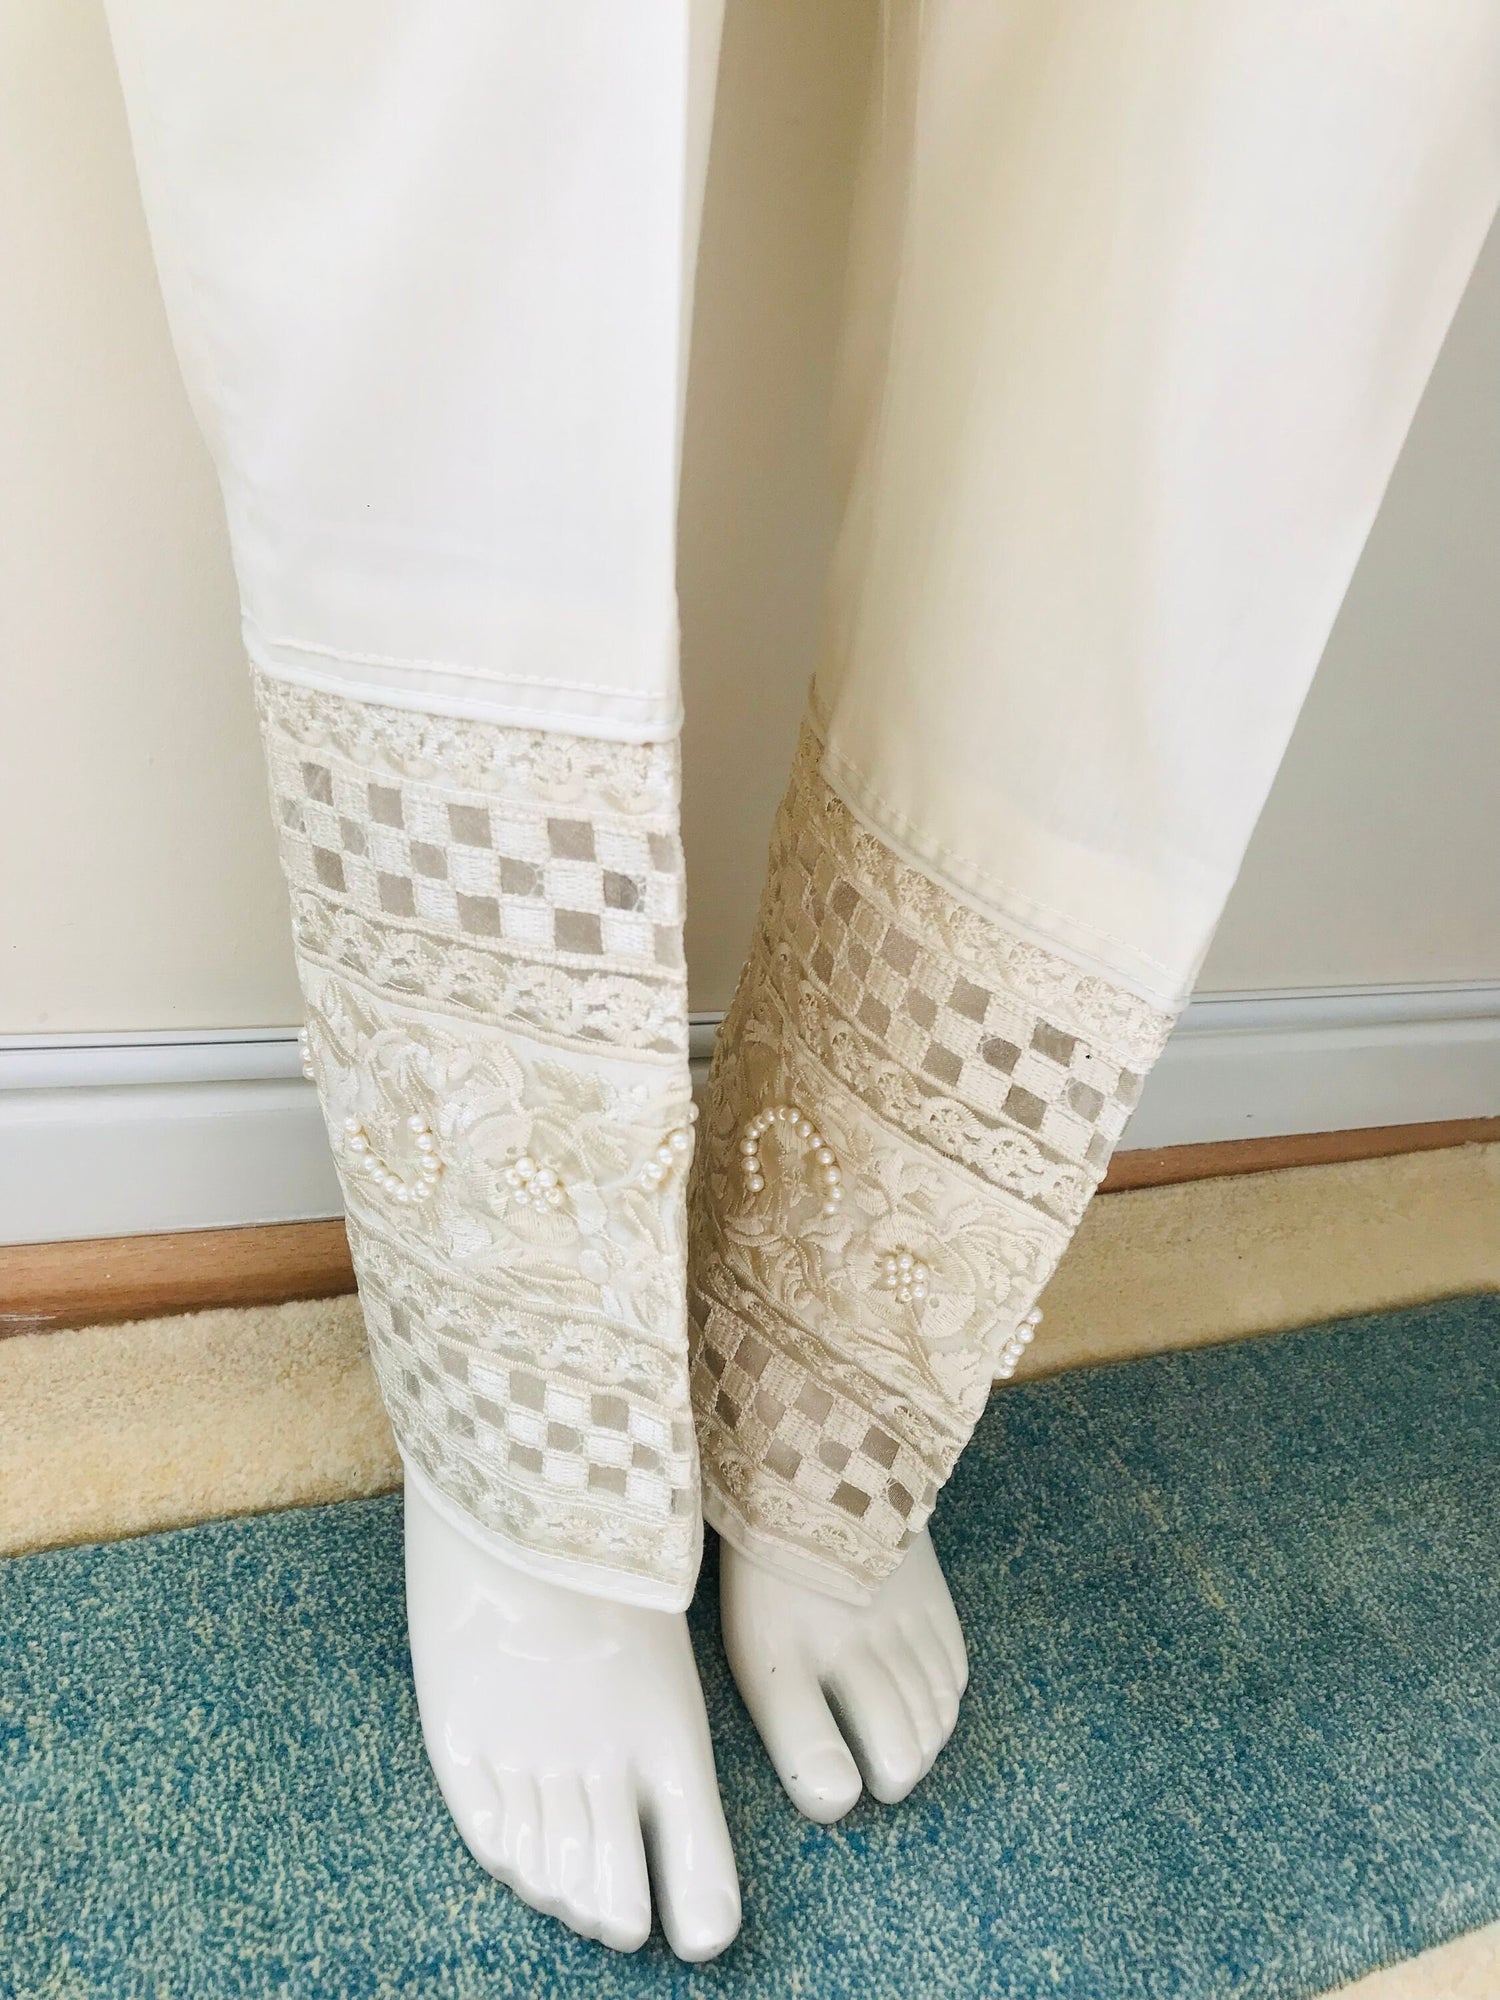 Indian Pakistani Pants/ Minimalist Cigarette Trousers/Cotton slim fit  trouser/Indian pants for women/pencil style trousers, Lace, pearls